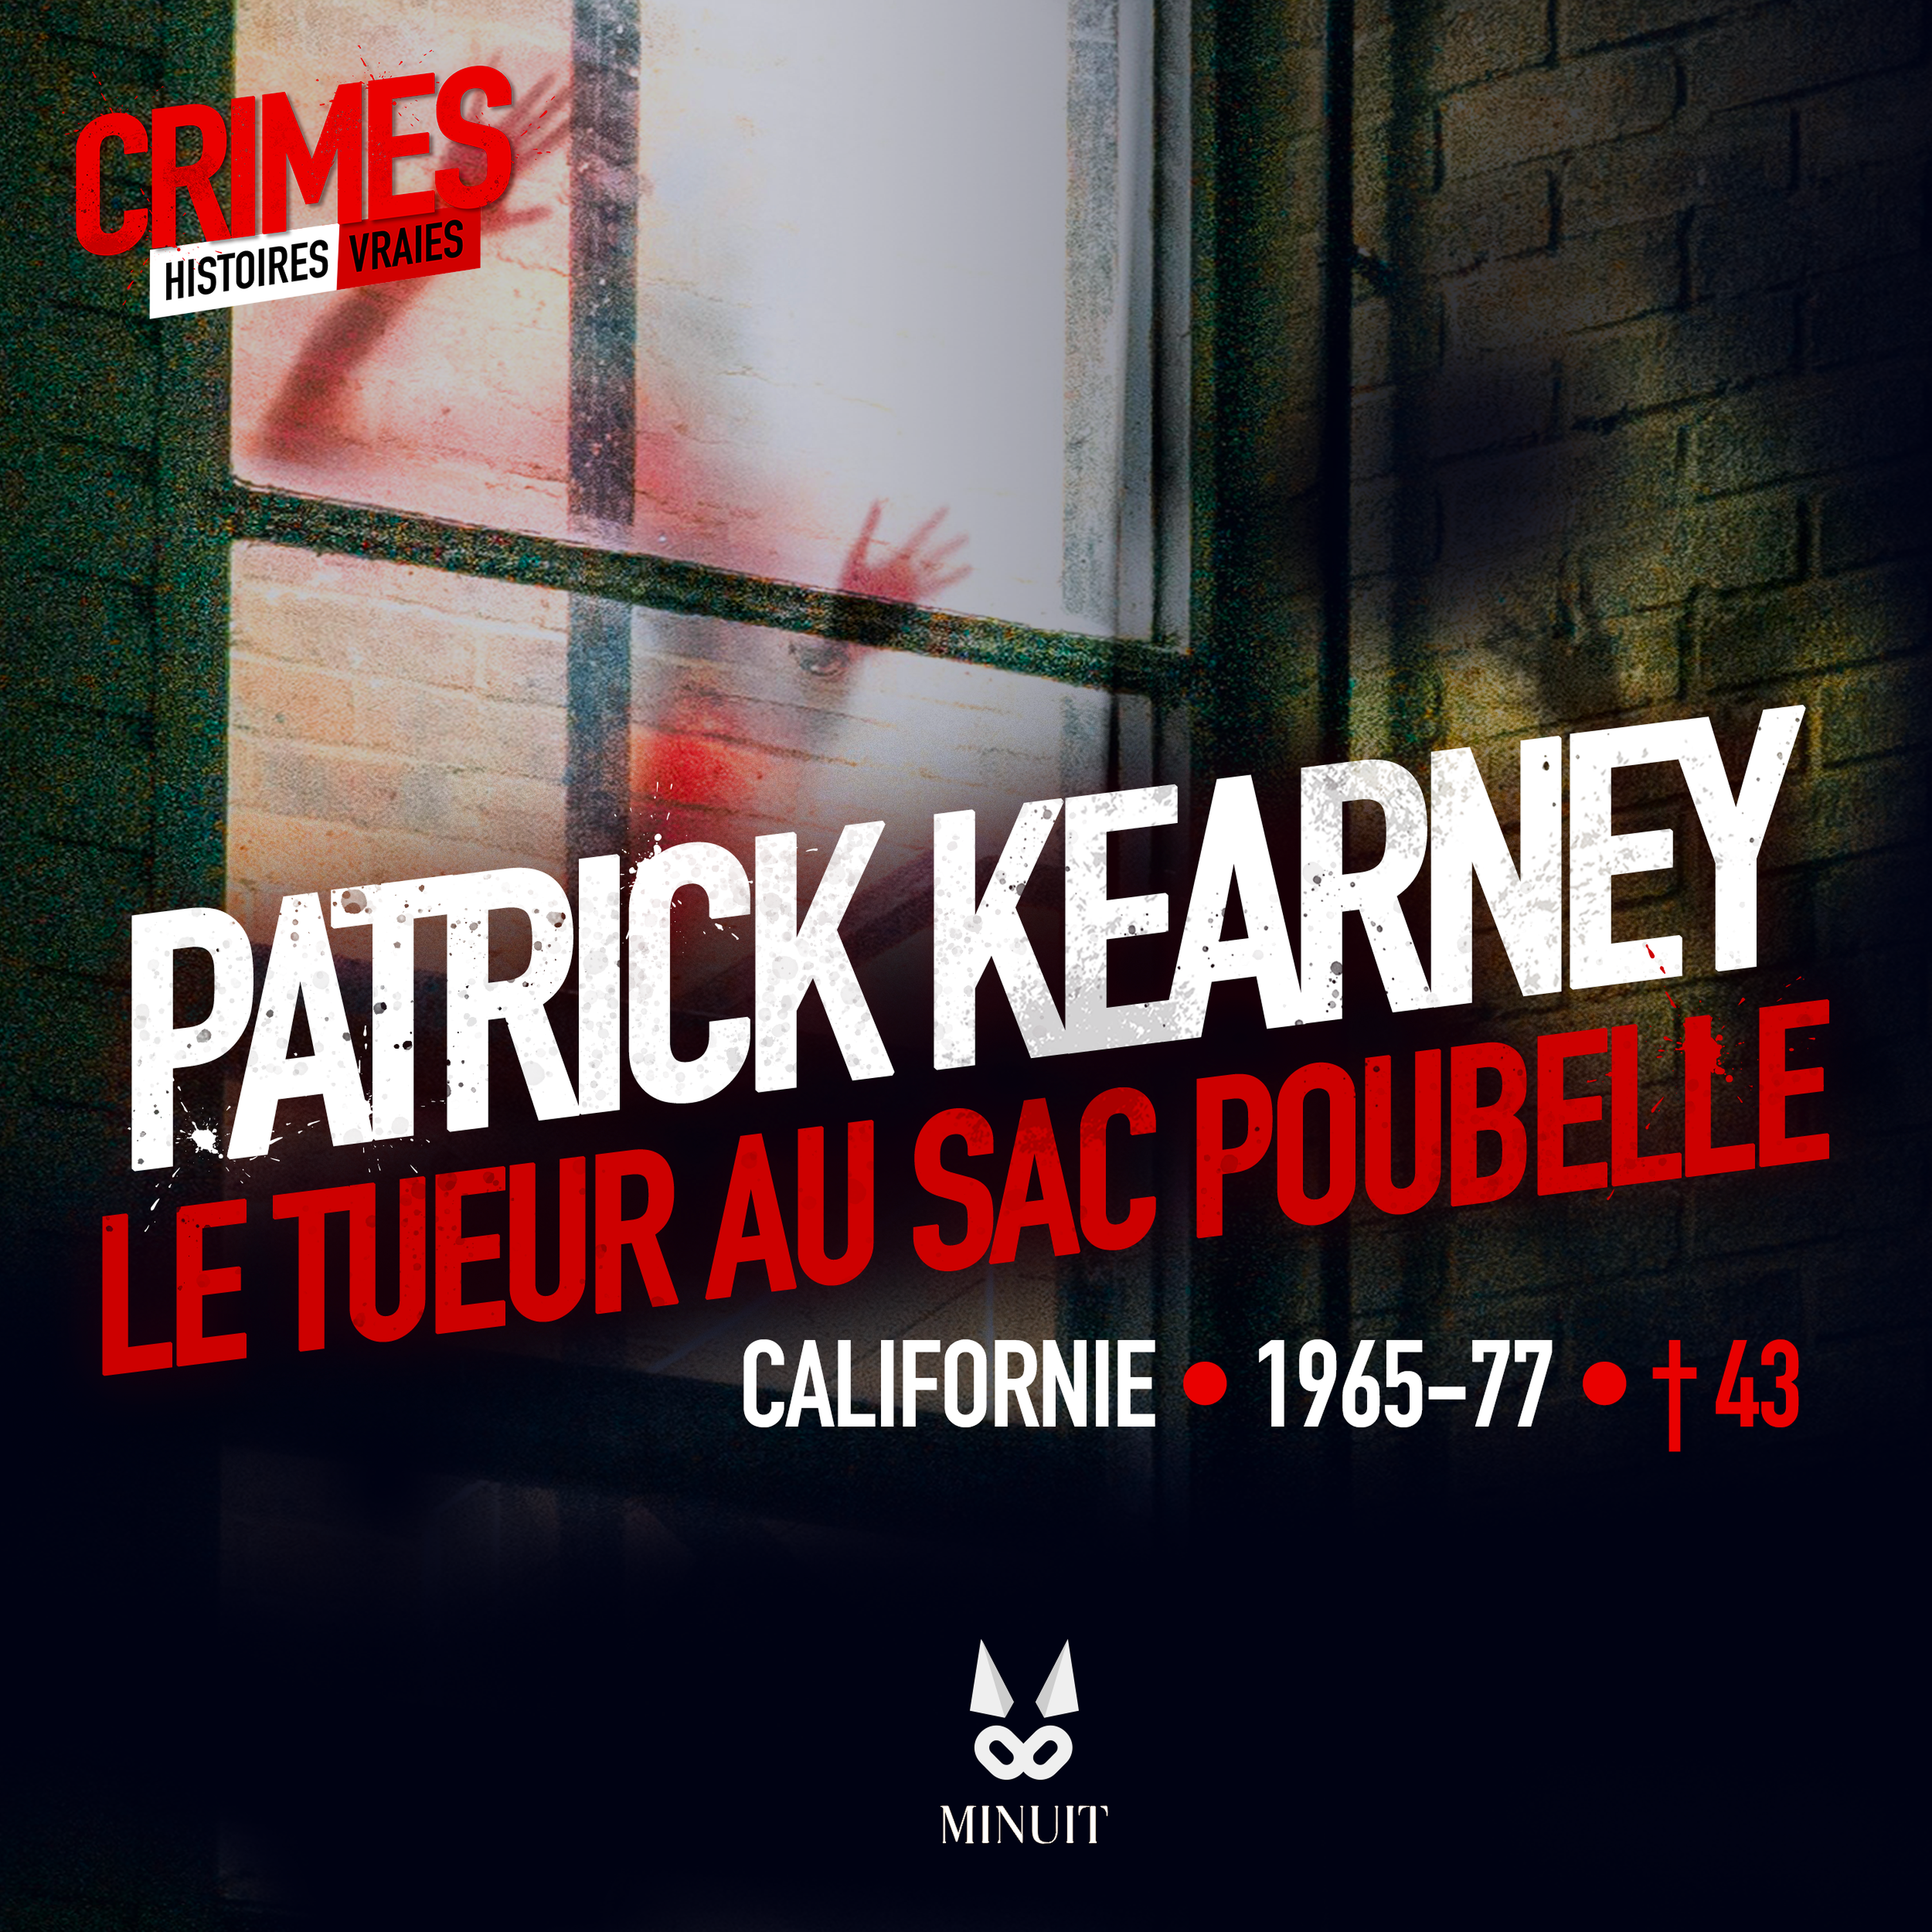 Patrick Wayne Kearney • Le tueur au sac poubelle